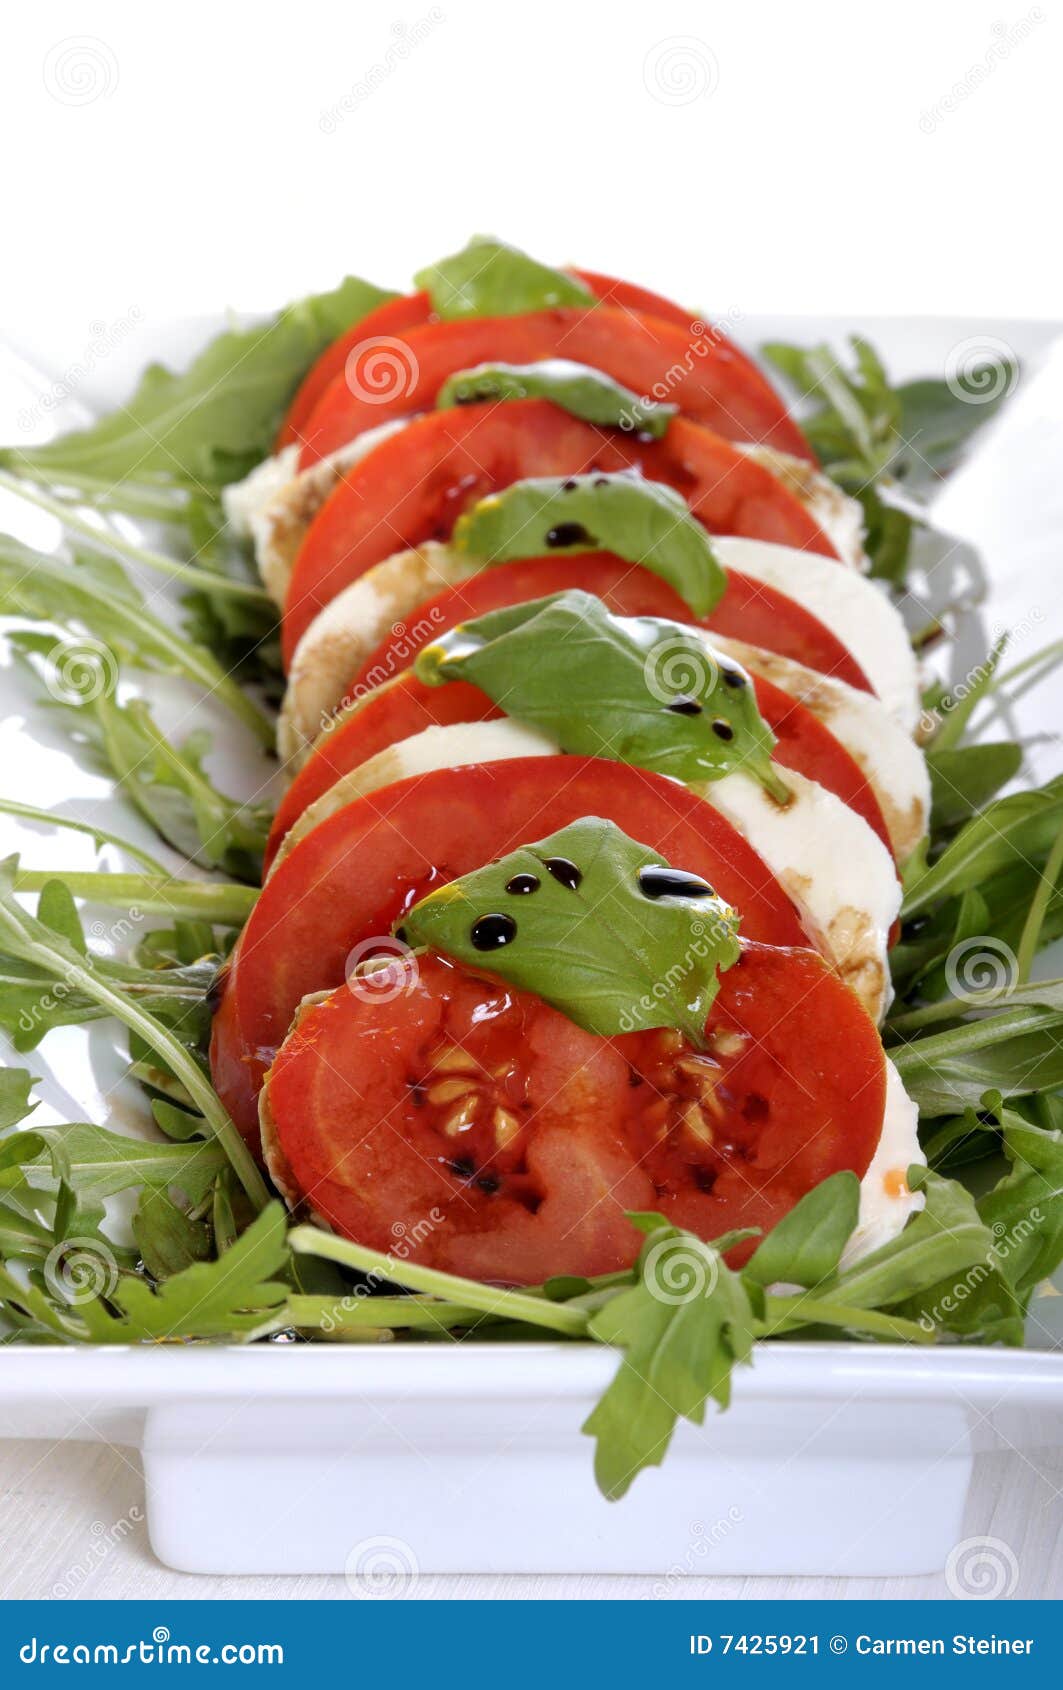 tomato and cheese antipasto